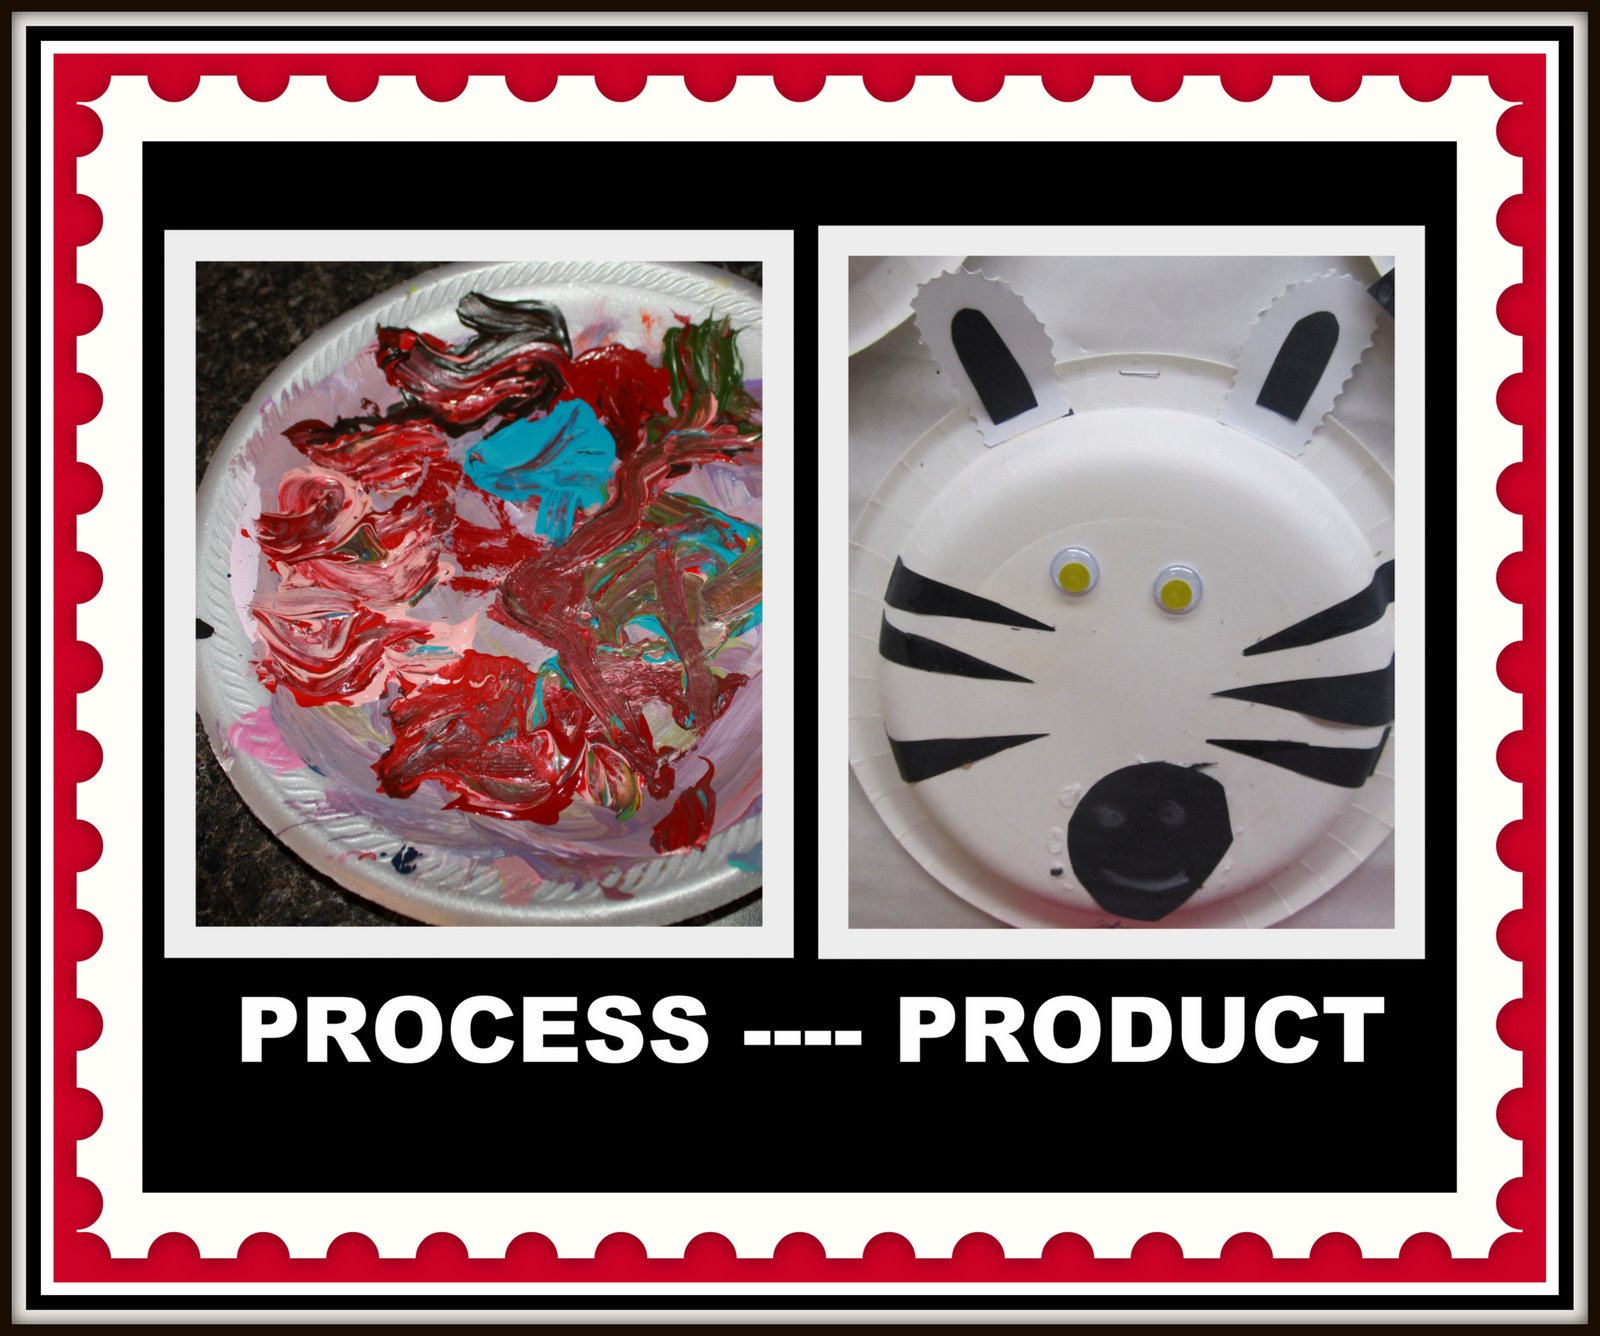 Process versus Product